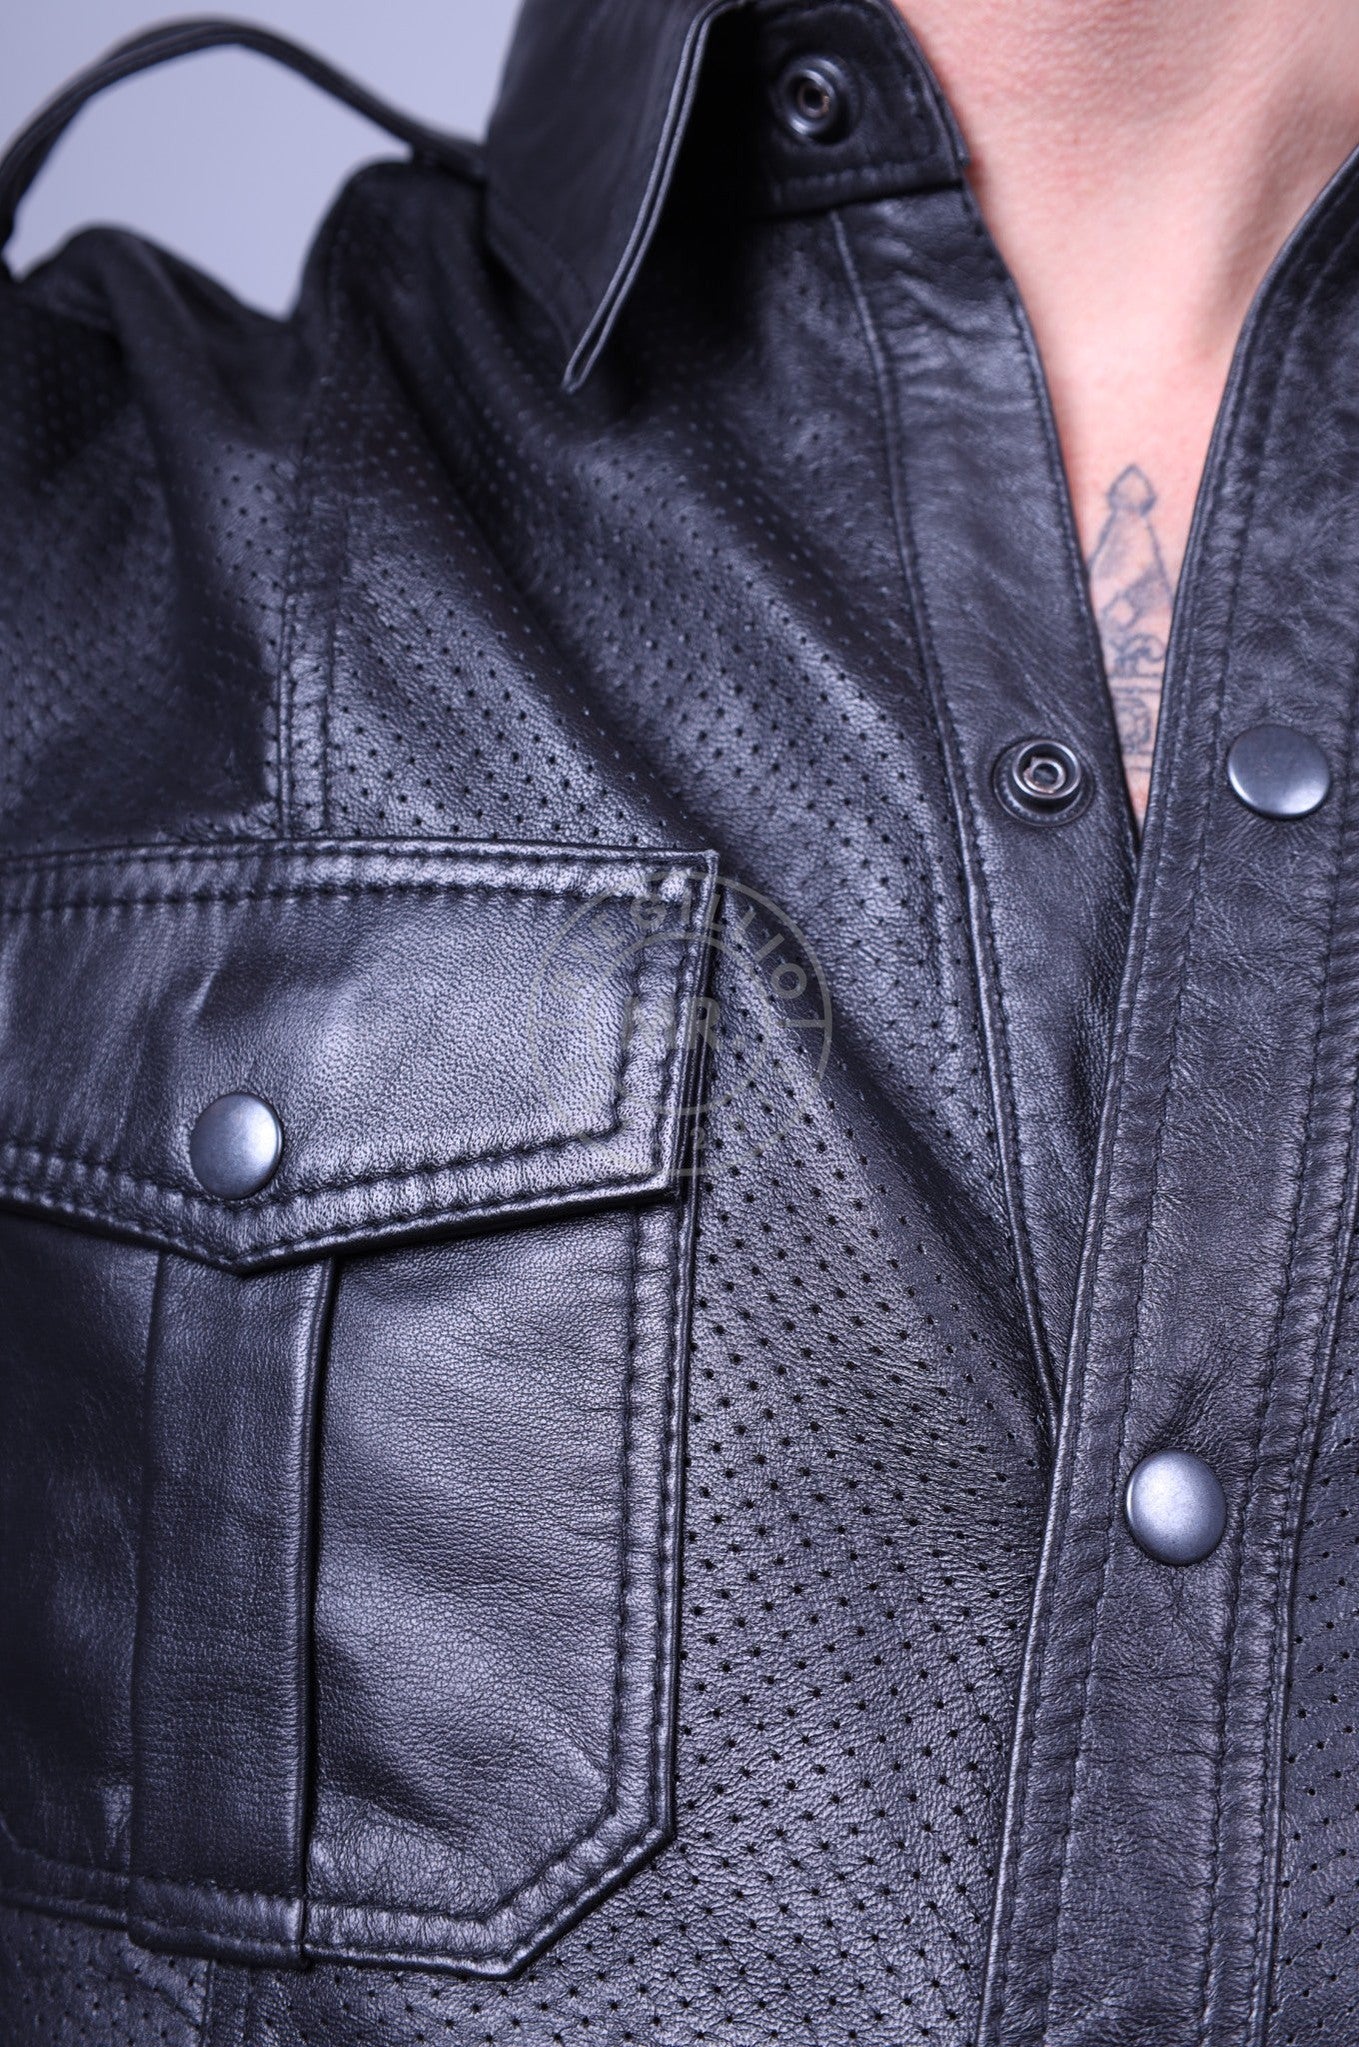 Black Leather Perforated Shirt at MR. Riegillio